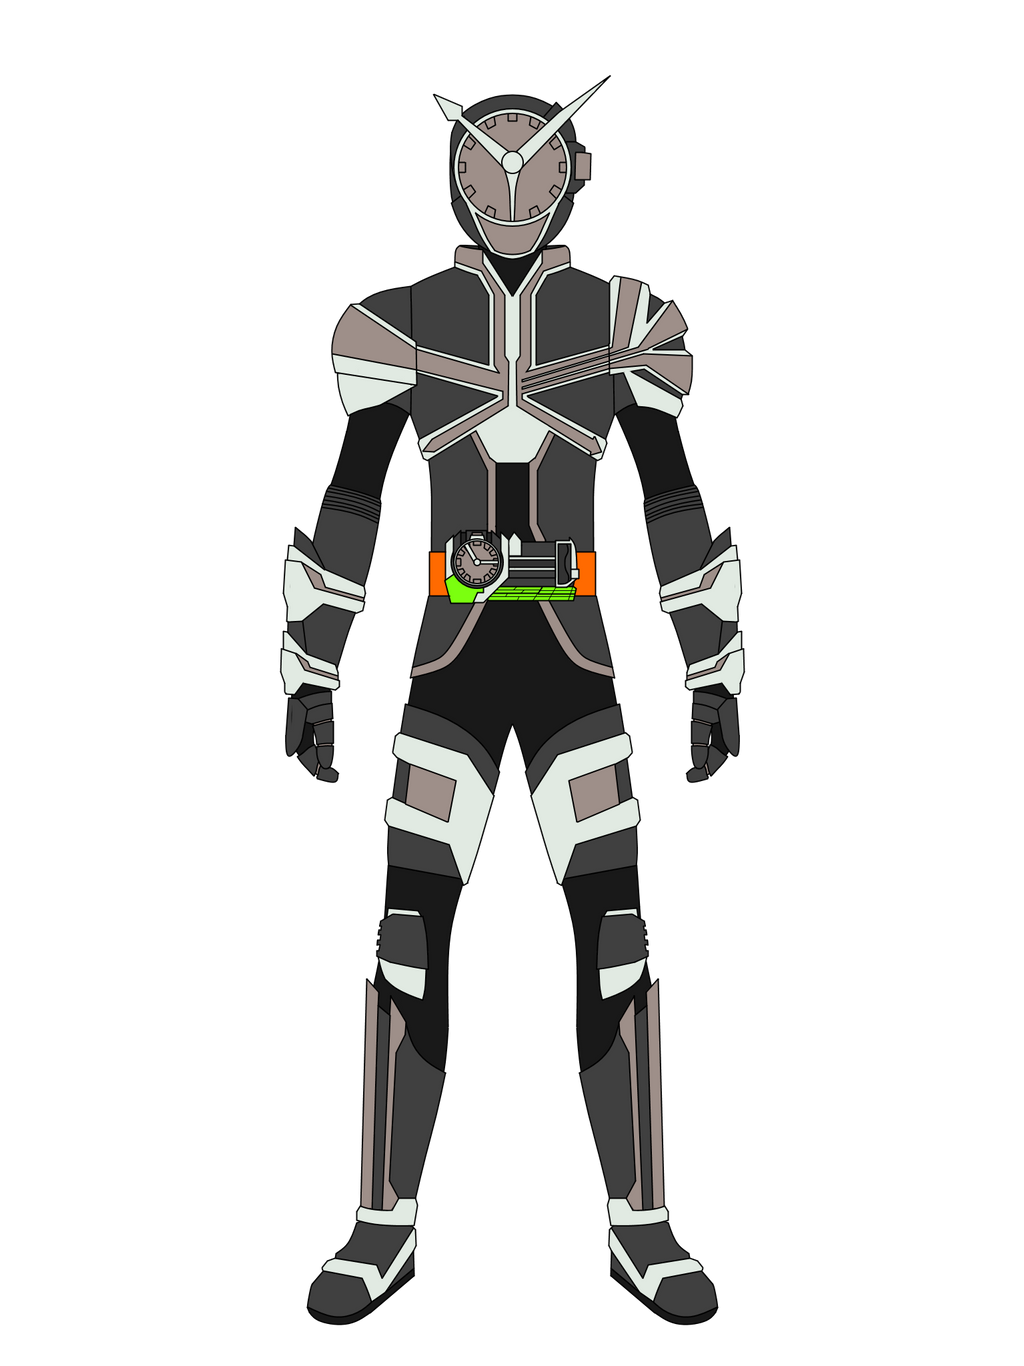 Kamen Rider Fan Design JoinedZero on DeviantArt